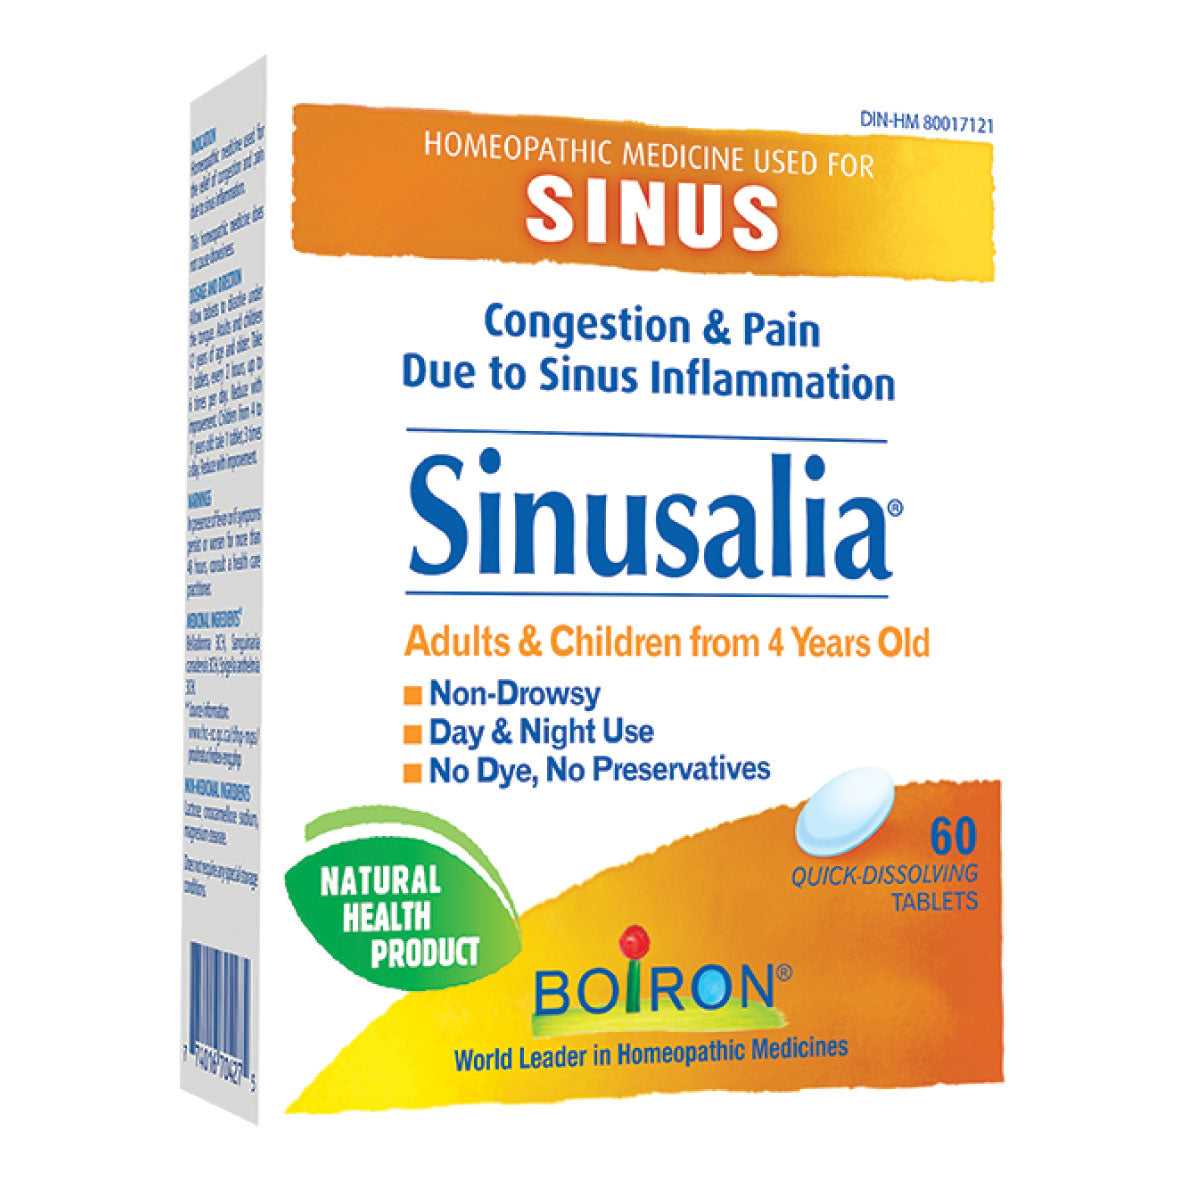 Boiron Sinusalia 60 quick dissolving tablets